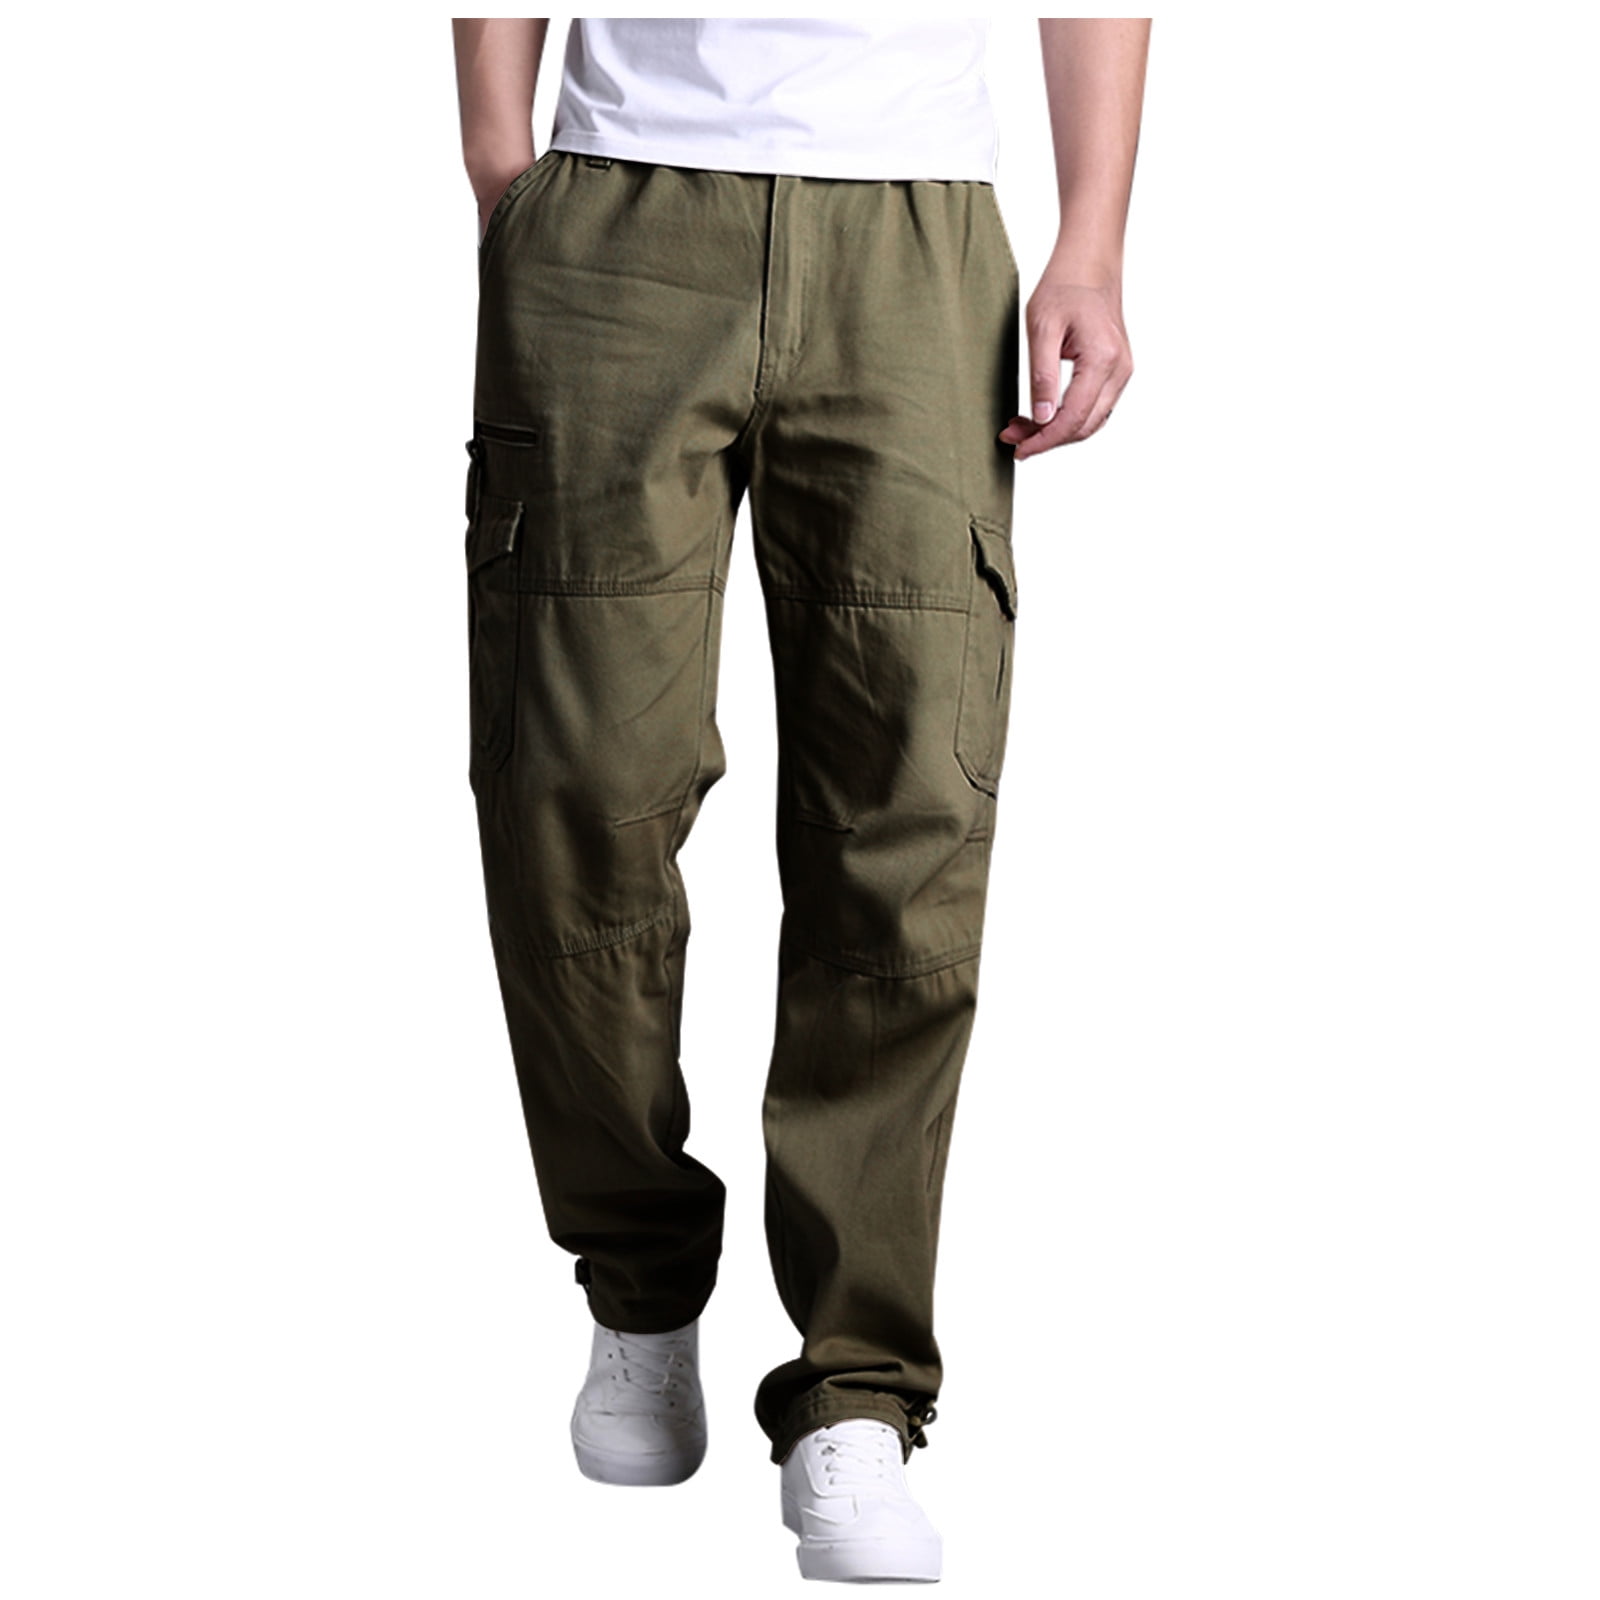 Men Cargo Pants Long Multi-Pocket Mid Waist Casual Pocket Beach Work Overalls Slacks Trousers Fashion Sport Loose Active 